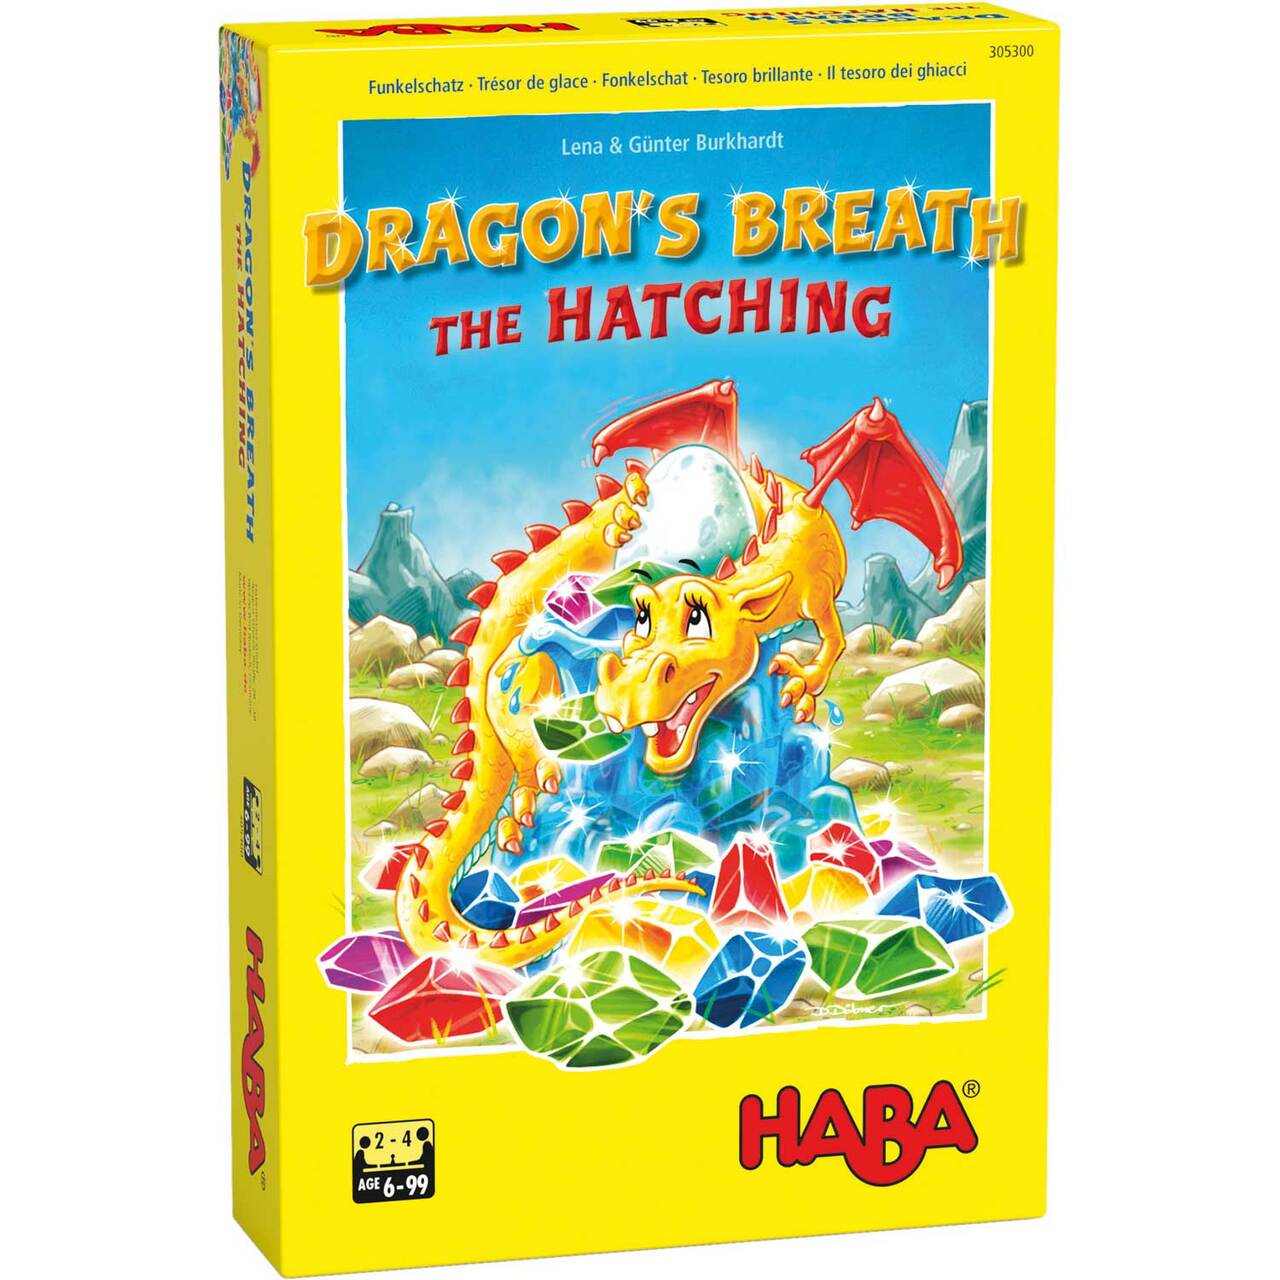 HABA Dragon's Breath - The Hatching